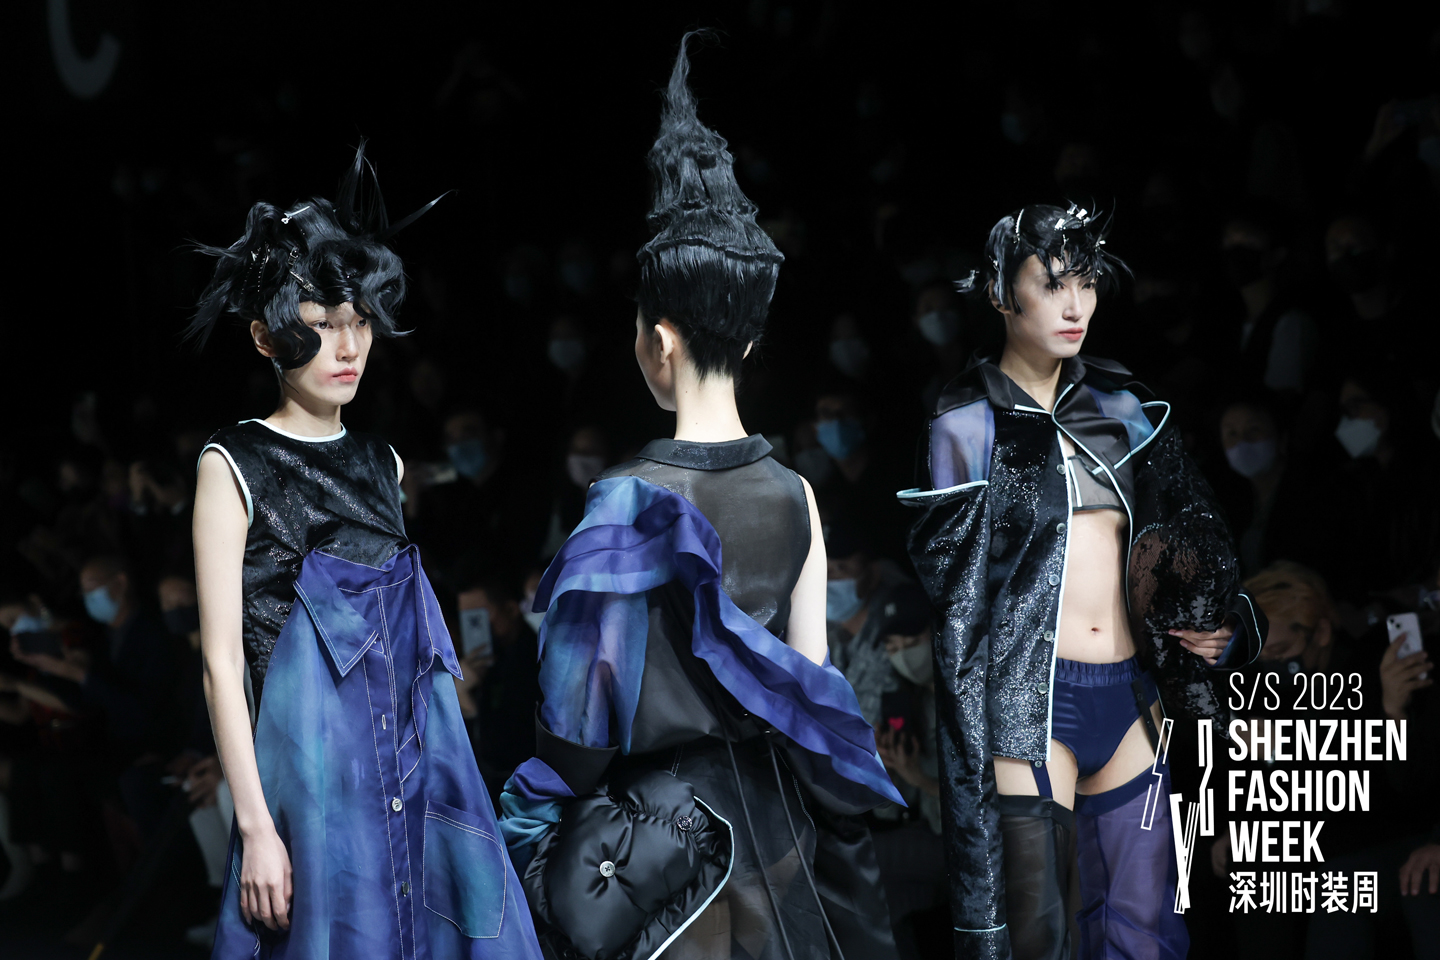 Models hitting the catwalk in wonderfully hand-coloured looks by Istituto Marangoni Shenzhen Fashion Design talent Li Enqi